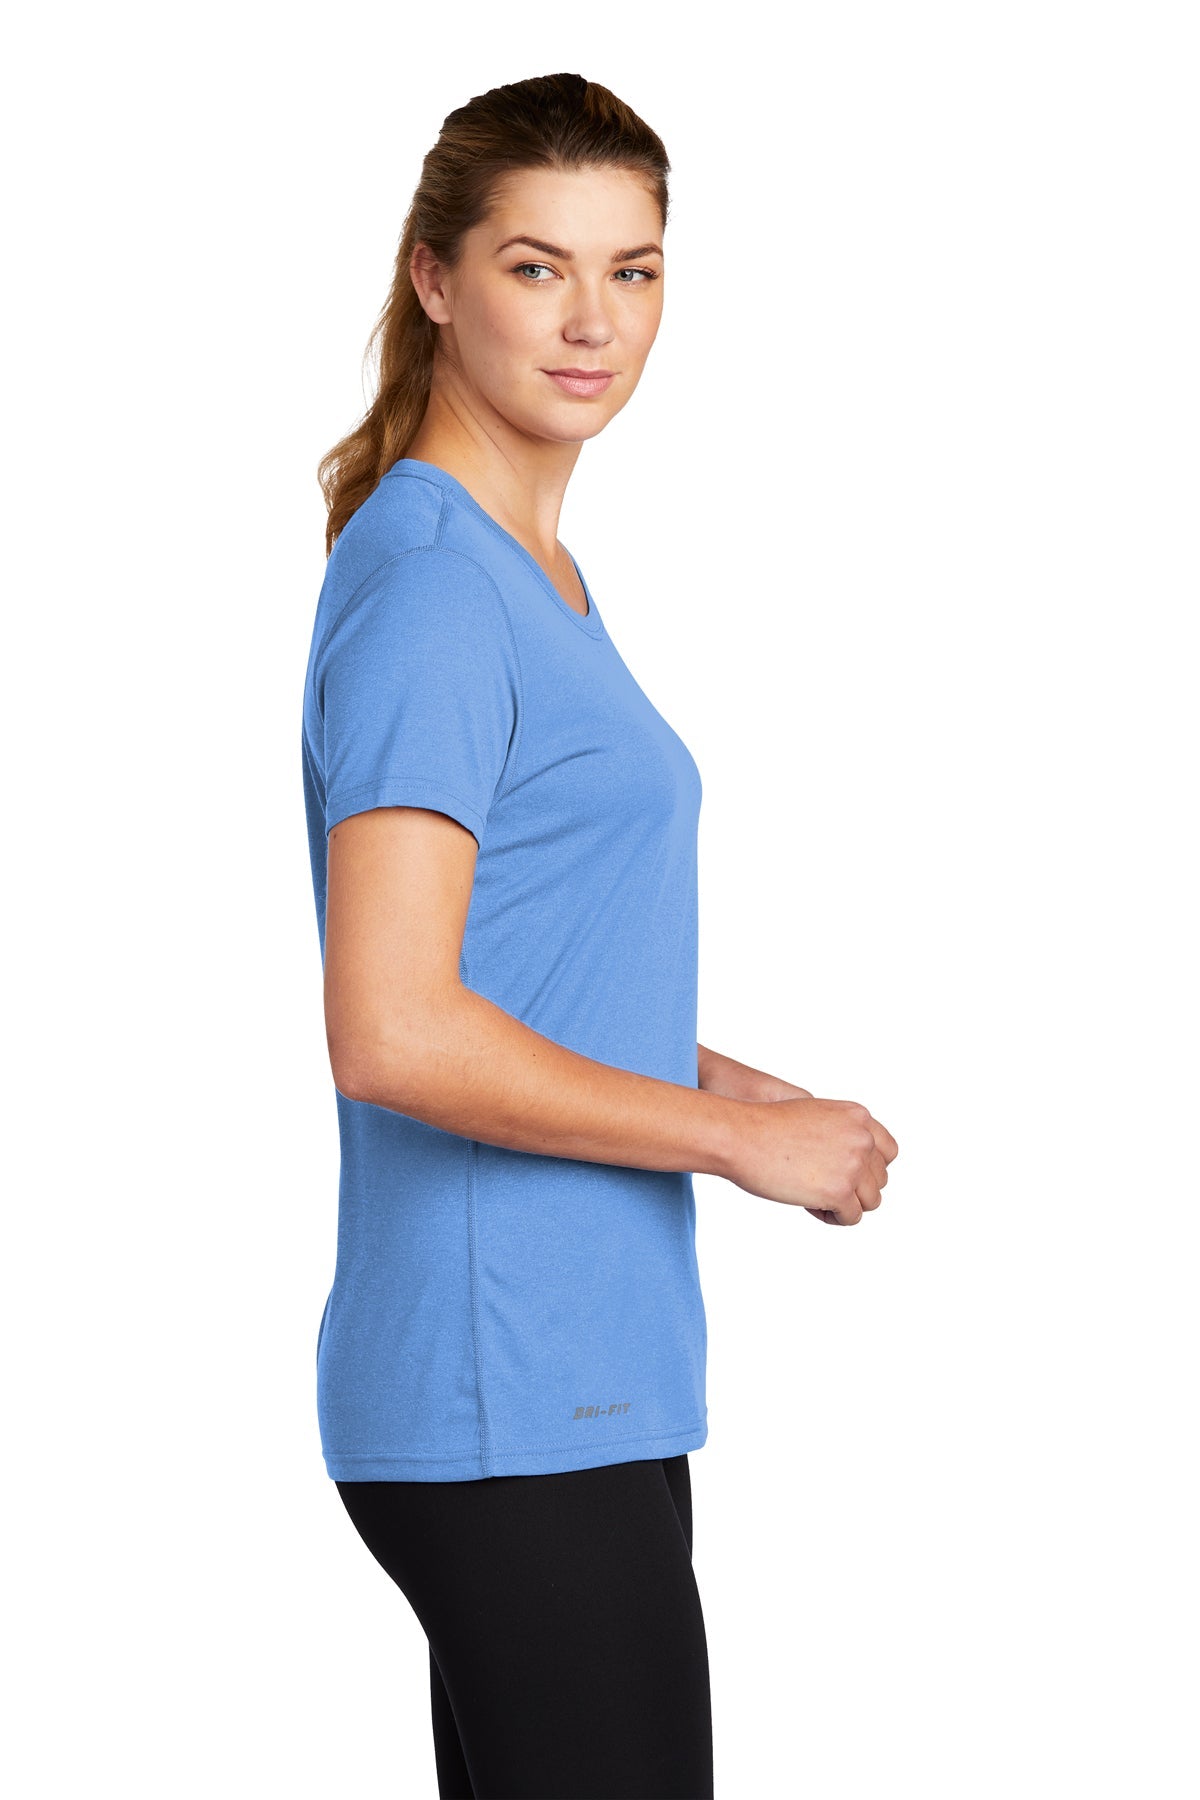 Nike Ladies Legend Customized T-Shirts, Valor Blue